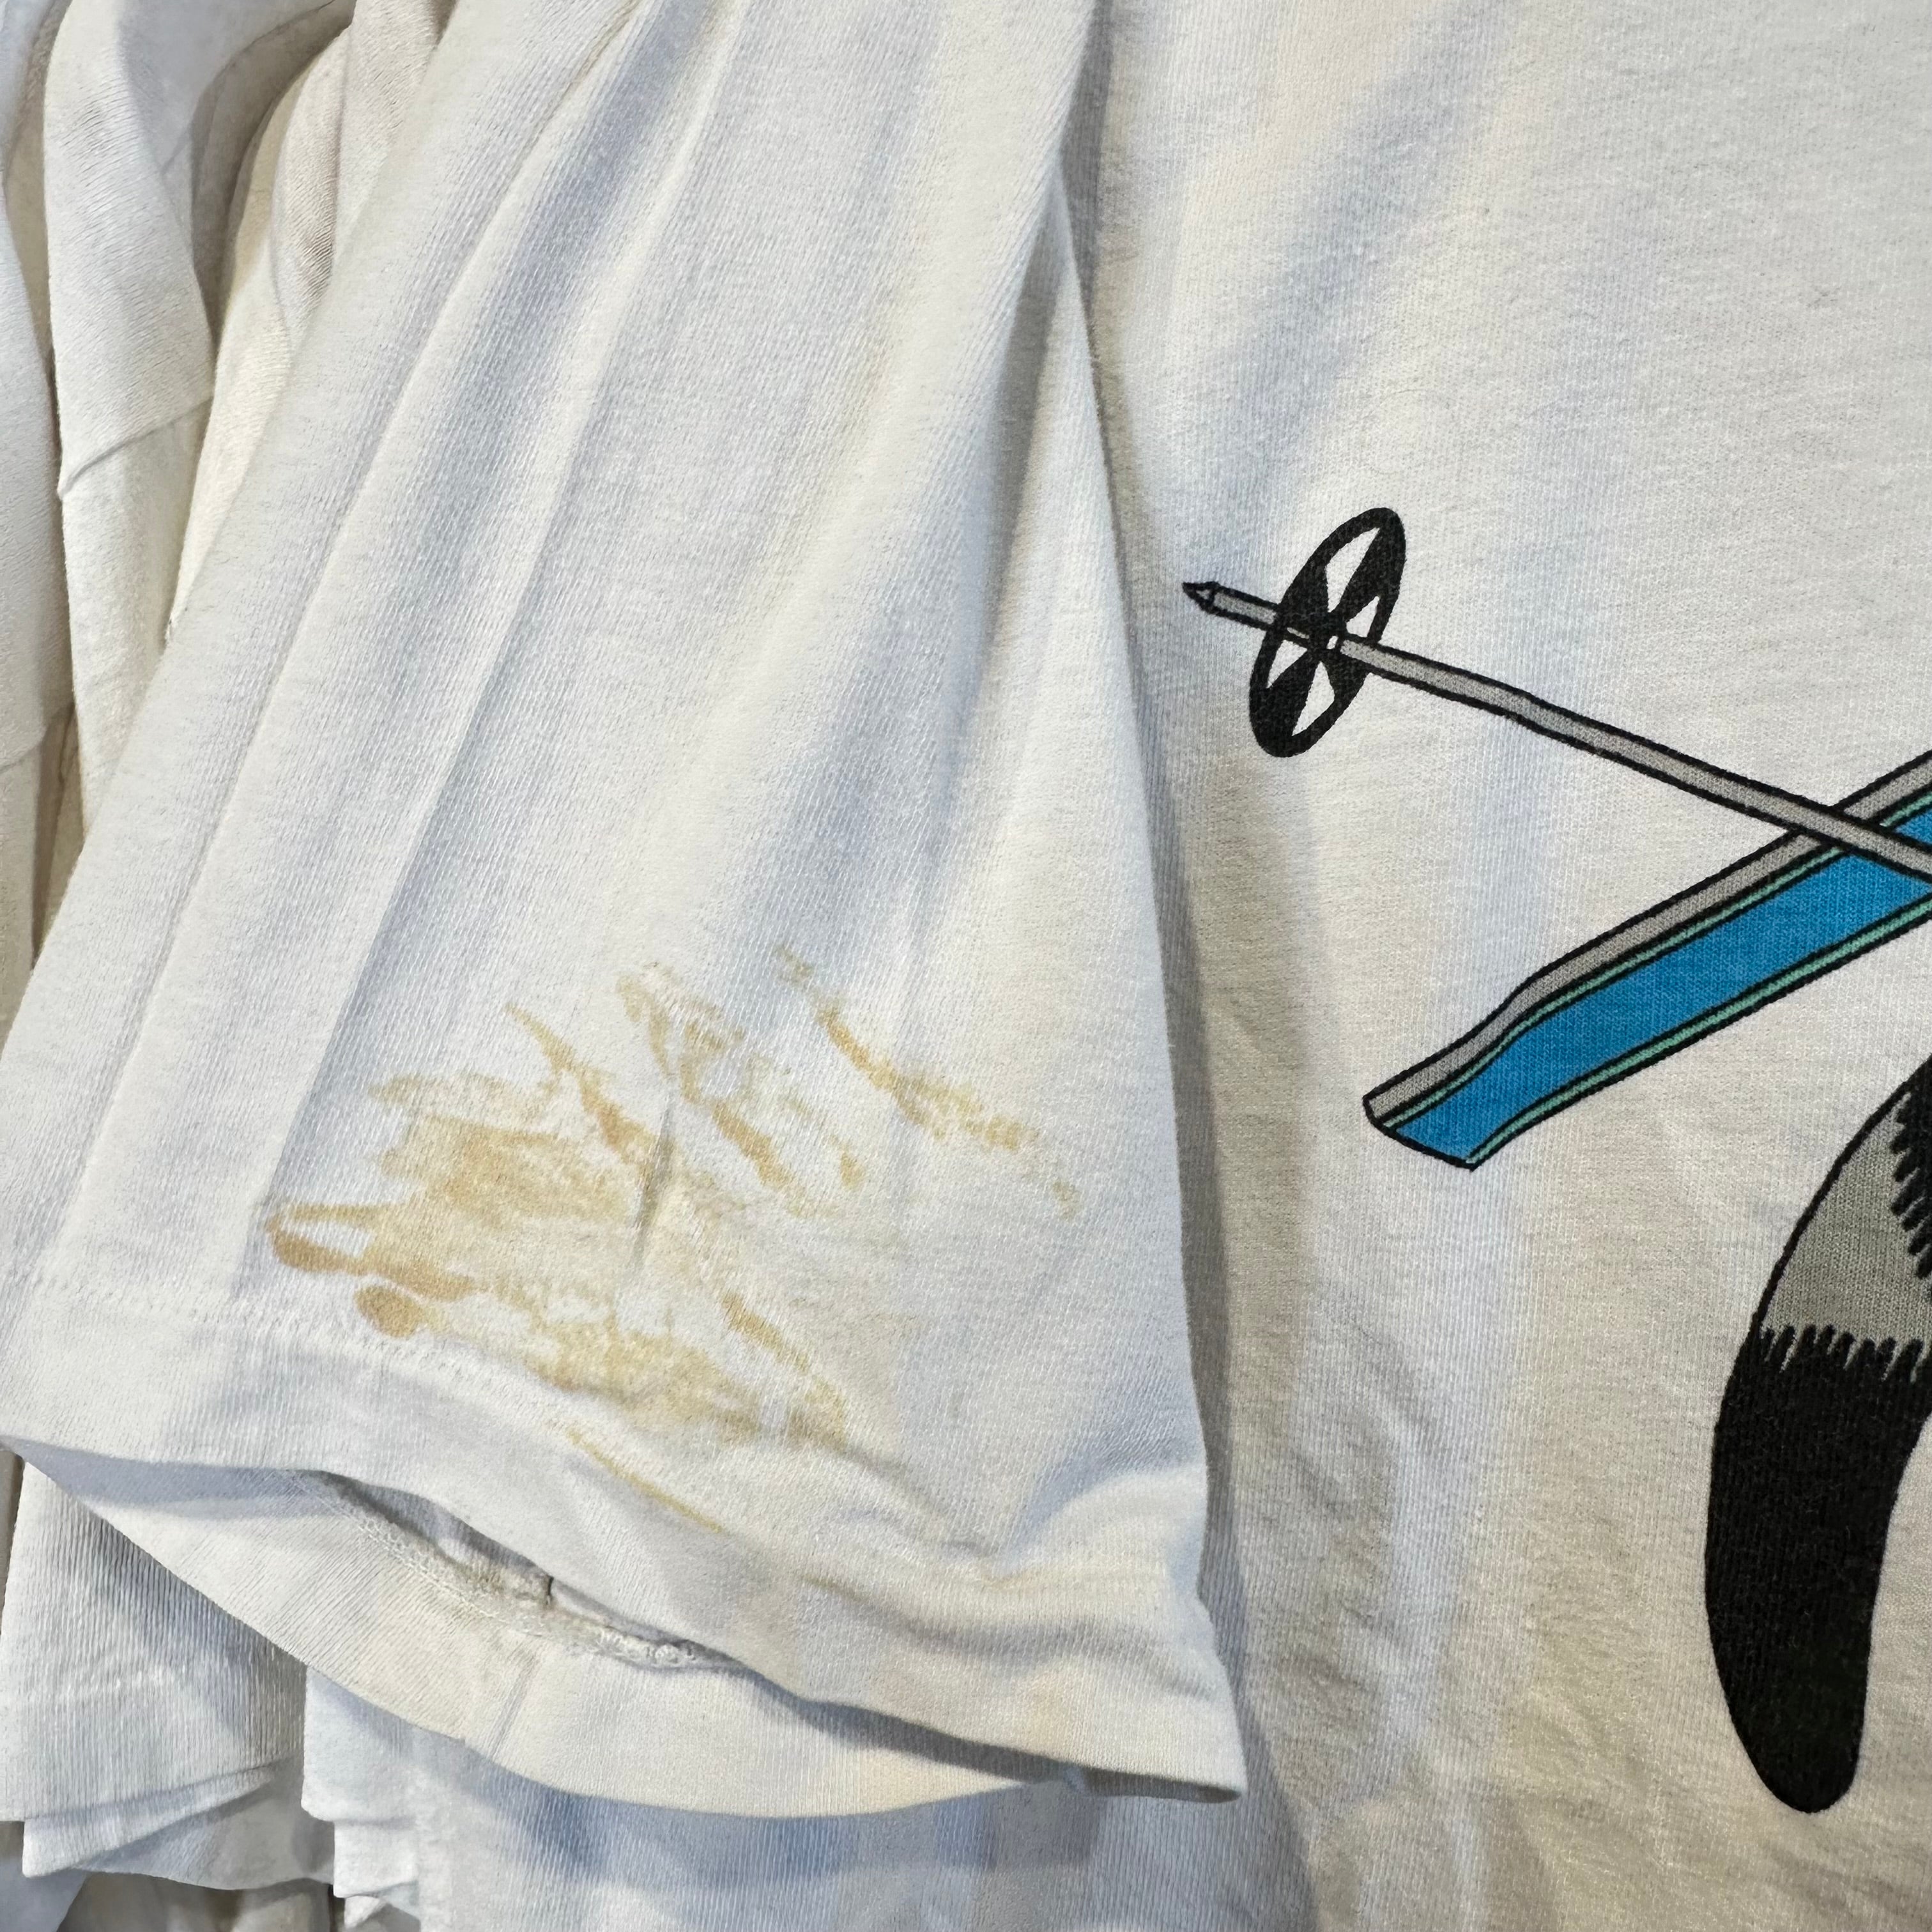 Vail Skiing Cat T-Shirt